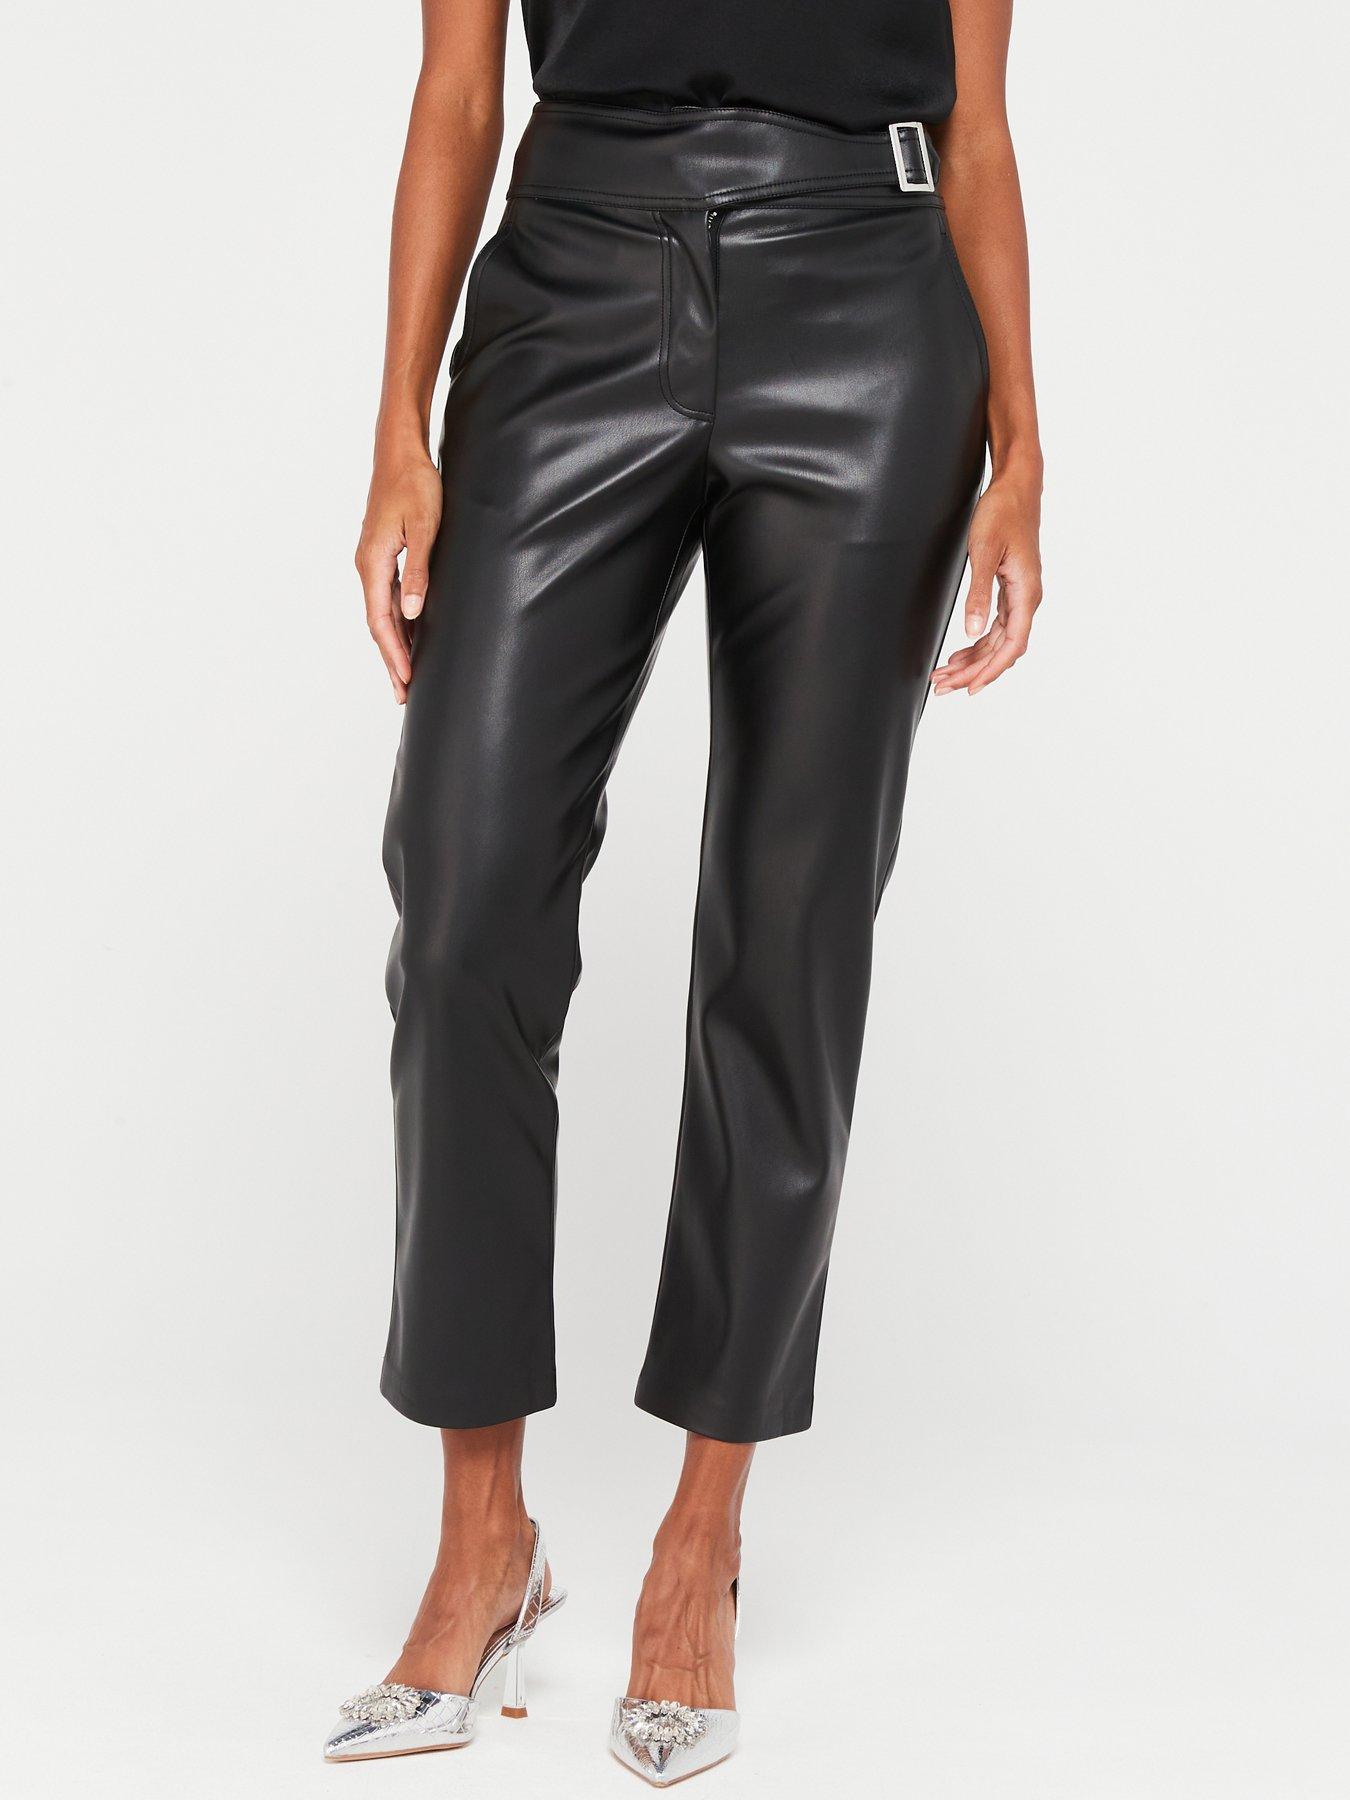 https://media.very.co.uk/i/very/VL94Z_SQ1_0000000004_BLACK_MDf/v-by-very-faux-leather-wrap-waist-trousers-black.jpg?$180x240_retinamobilex2$&$roundel_very$&p1_img=sale_2017